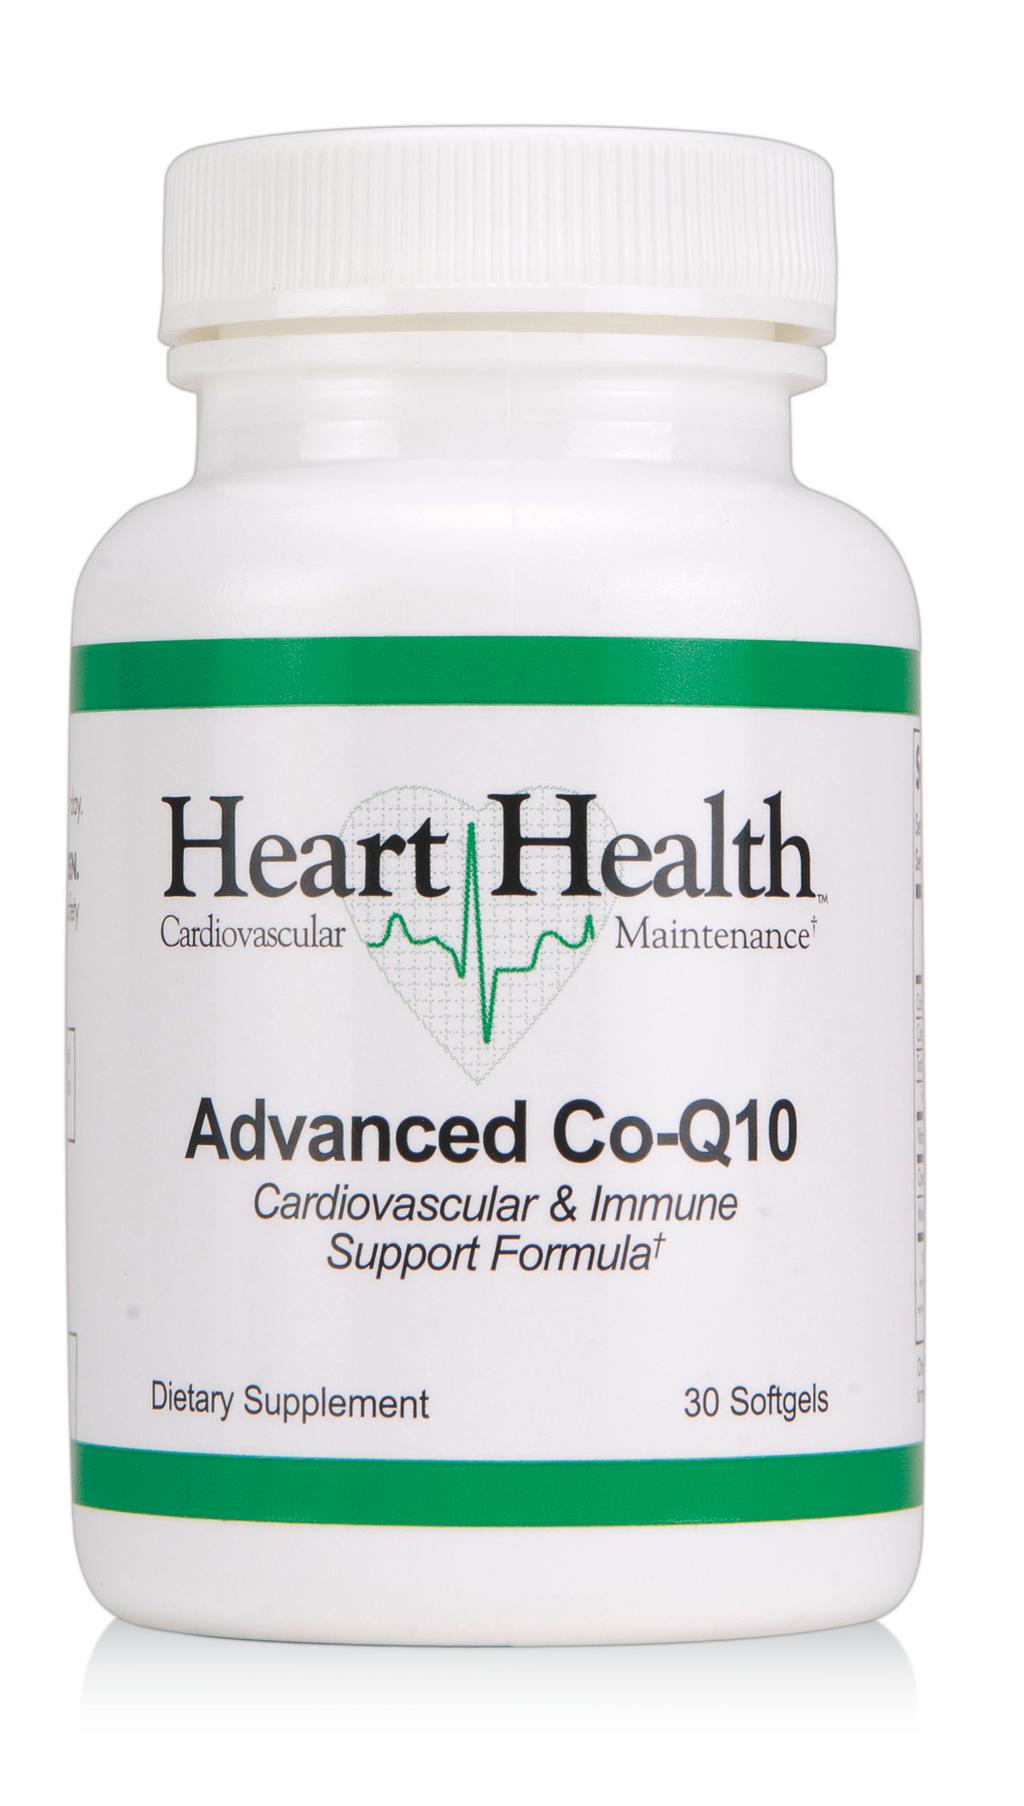 nutrametrix Heart Health Advanced Co-Q10 Cardiovascular and Immune Support Formula Dental Health Regimen nutrametrix Custom Health Solutions Promotes gum health Promotes/boosts the immune system